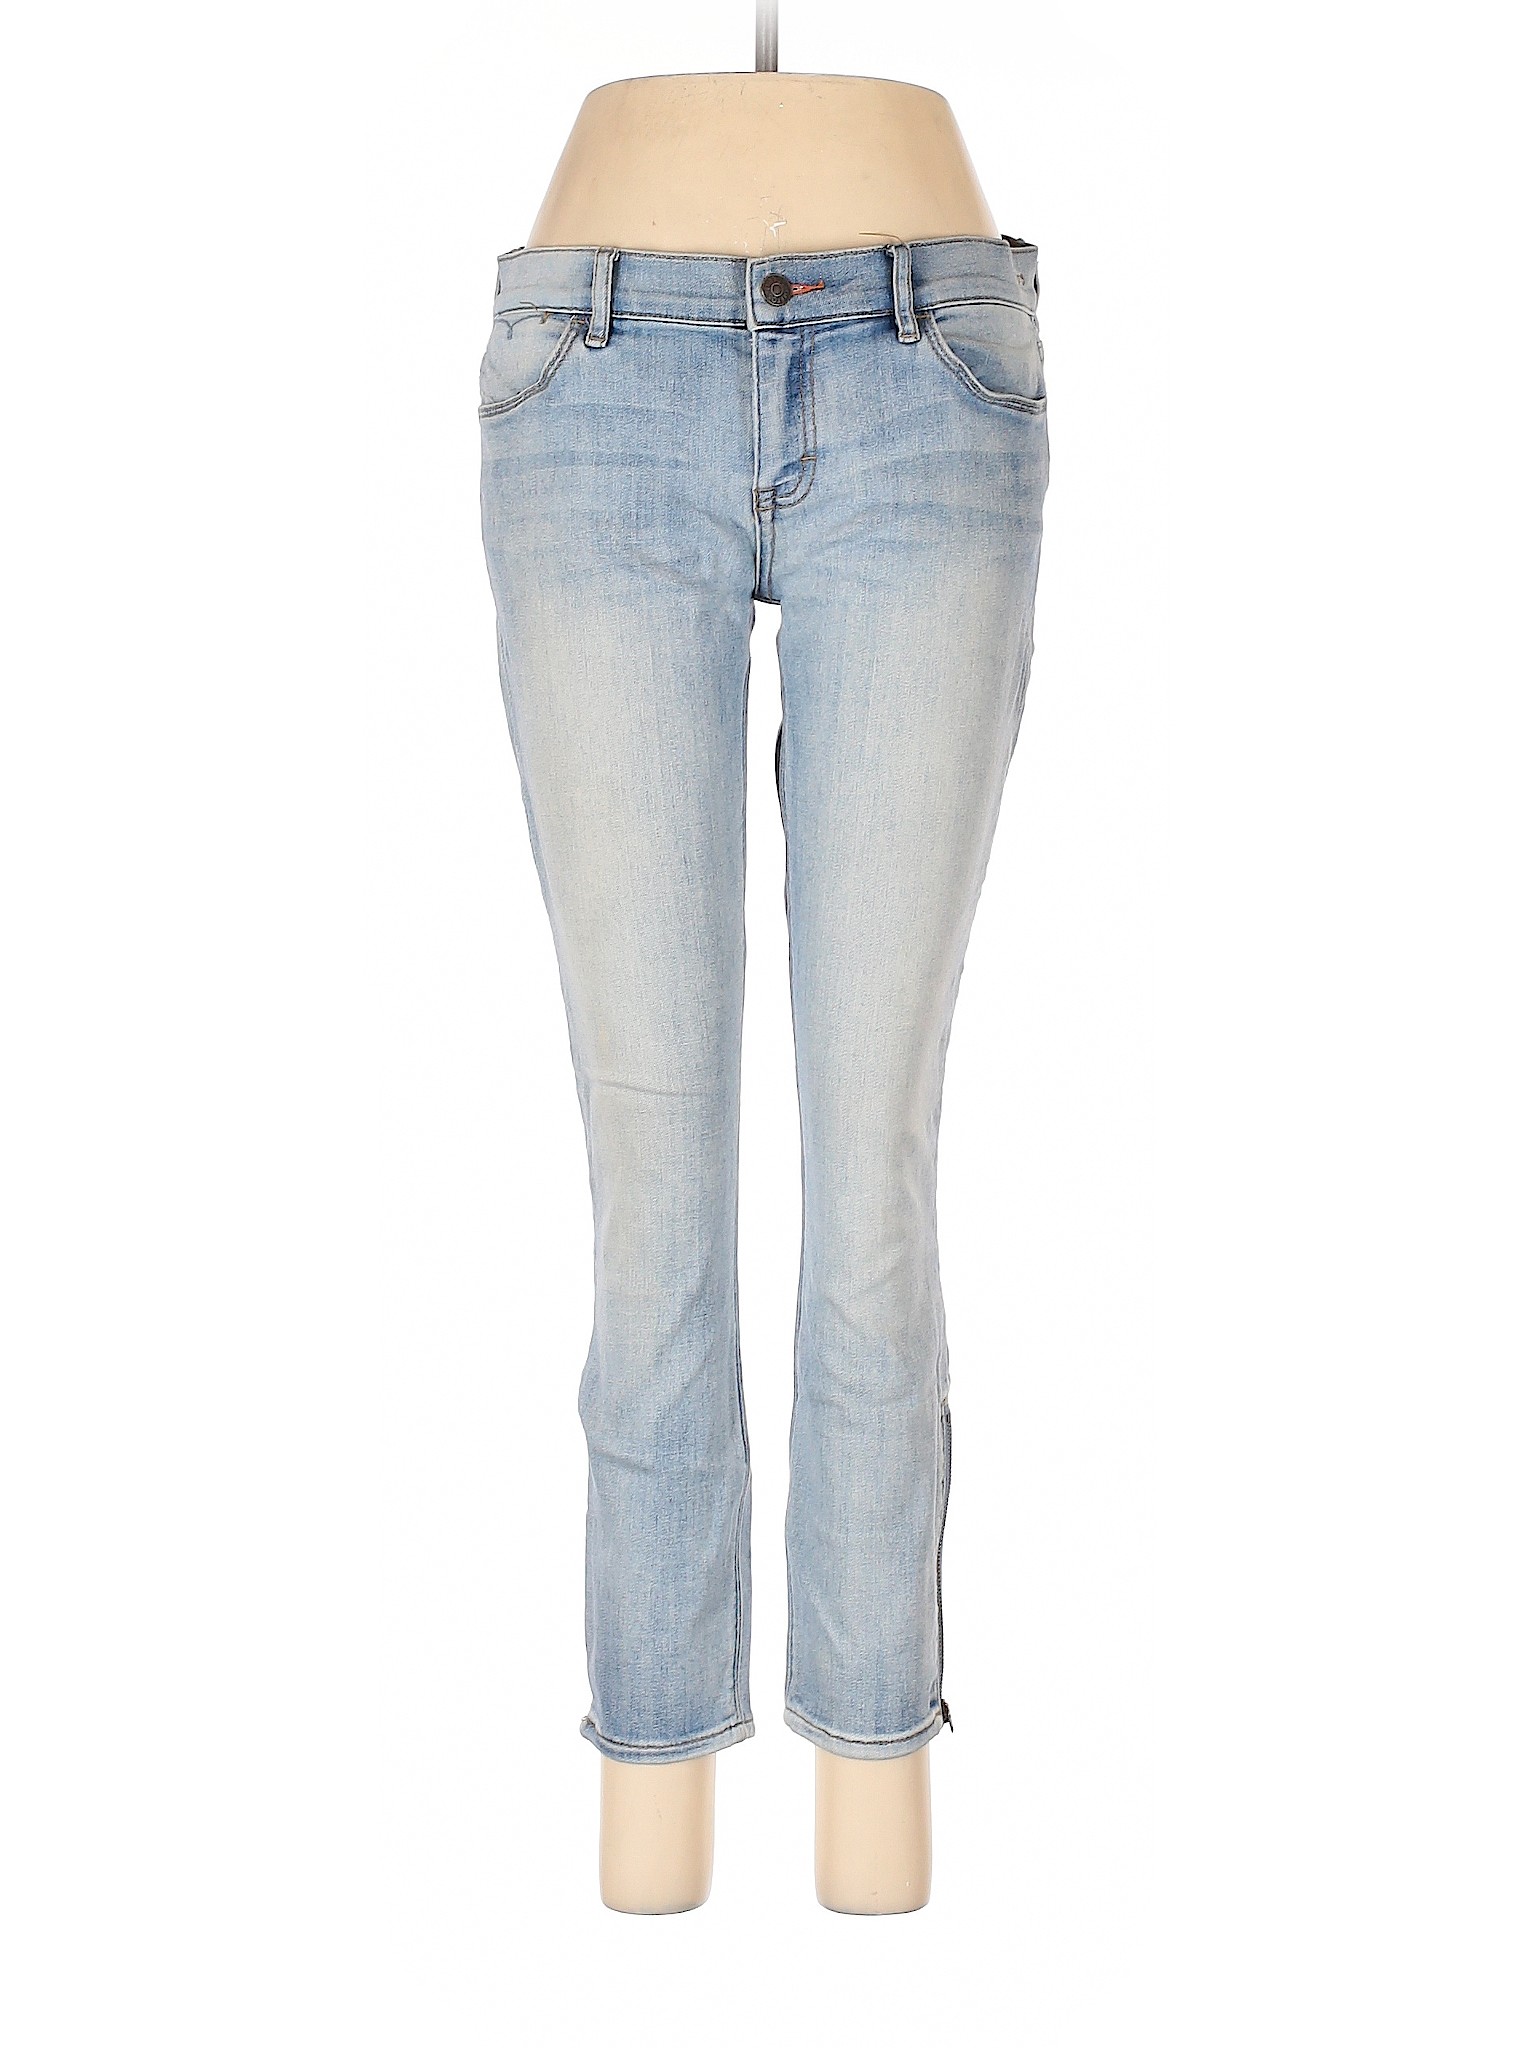 Dittos Women Blue Jeans 28W | eBay